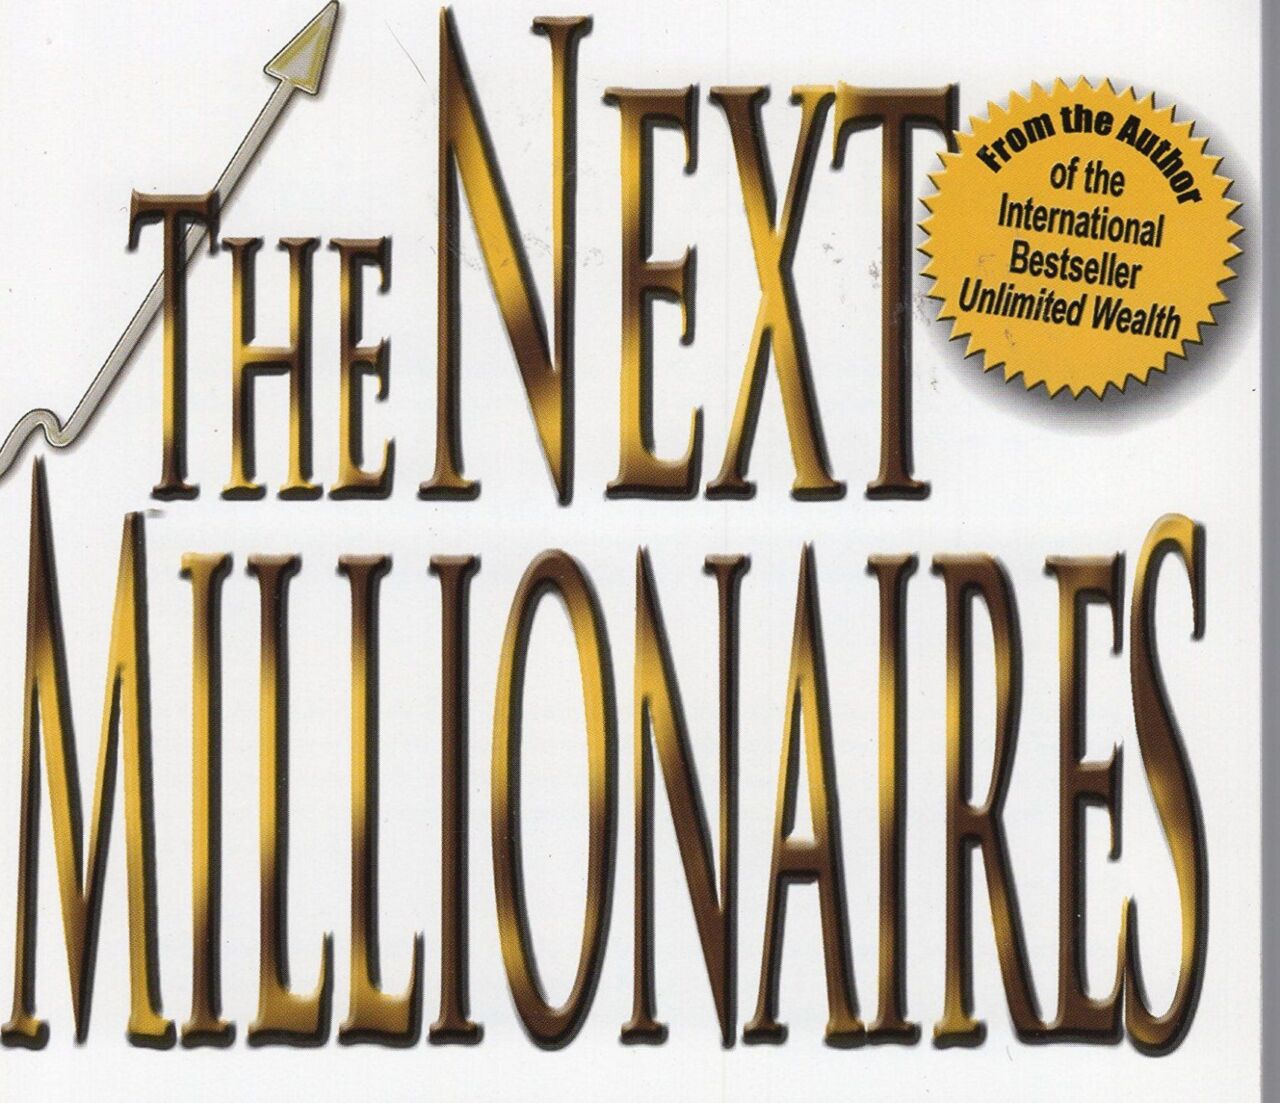 Next Millionaires